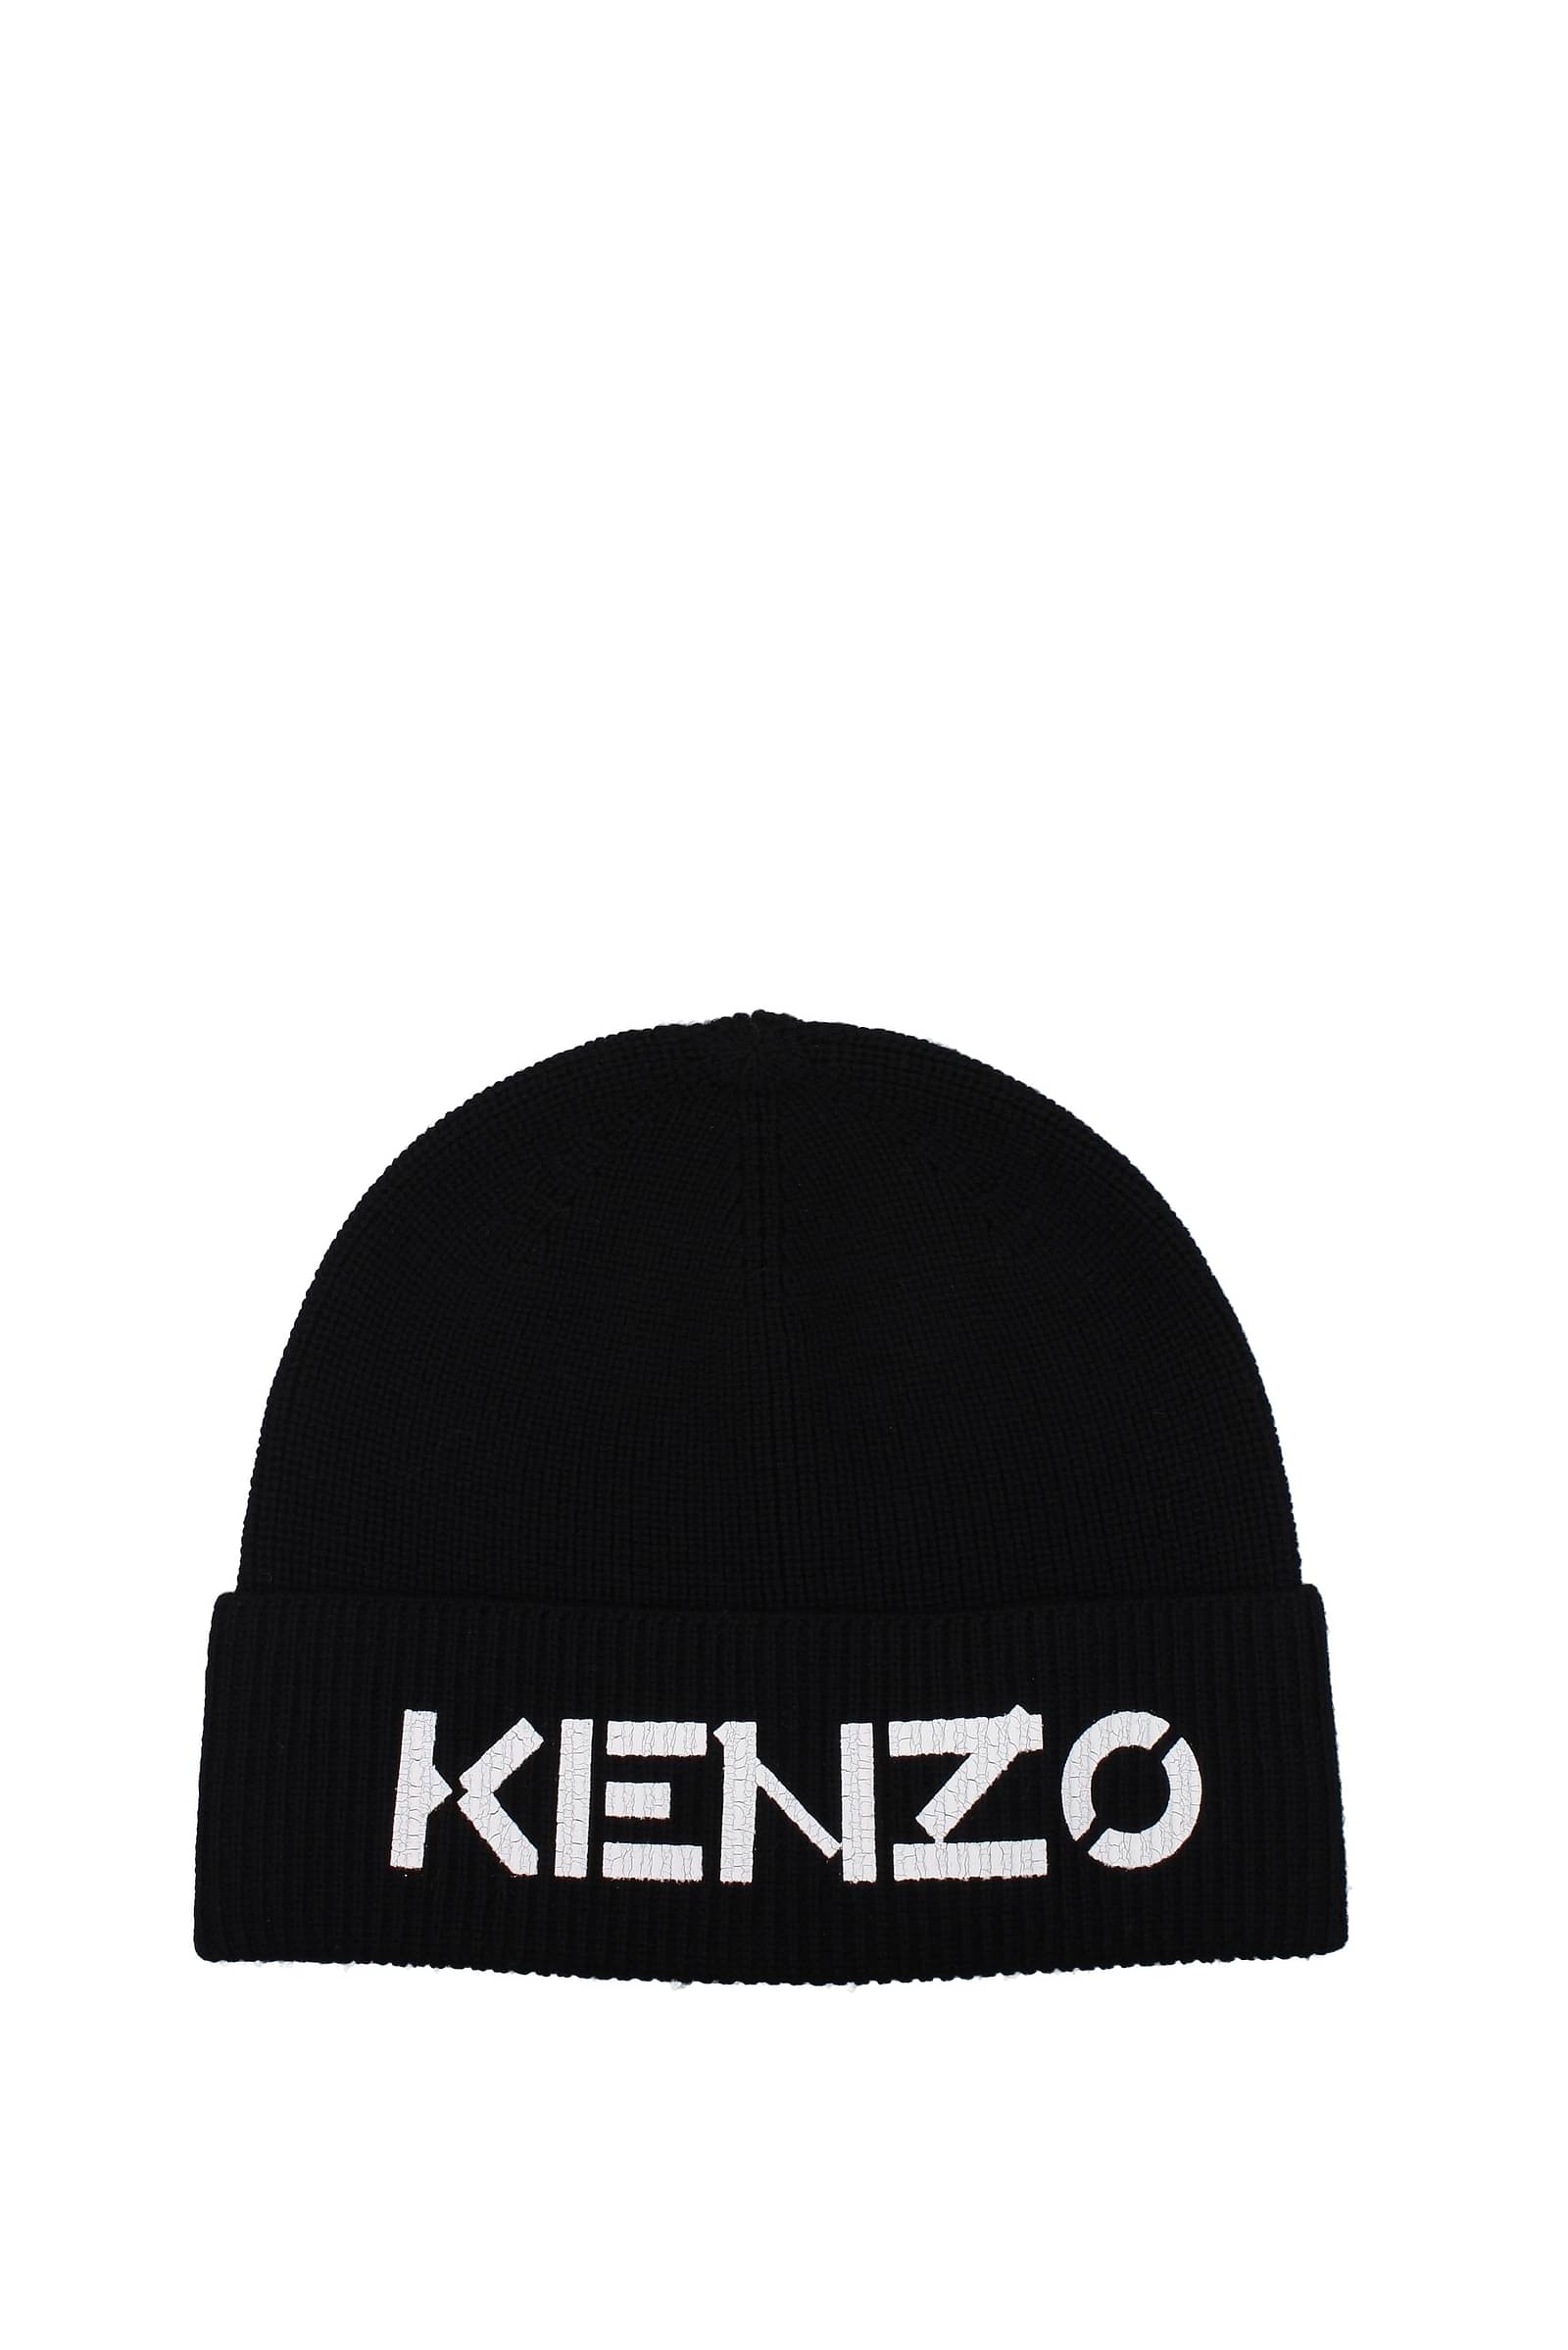 Kenzo 帽子 男性 8BU111KEK99 ウール 黒 54€